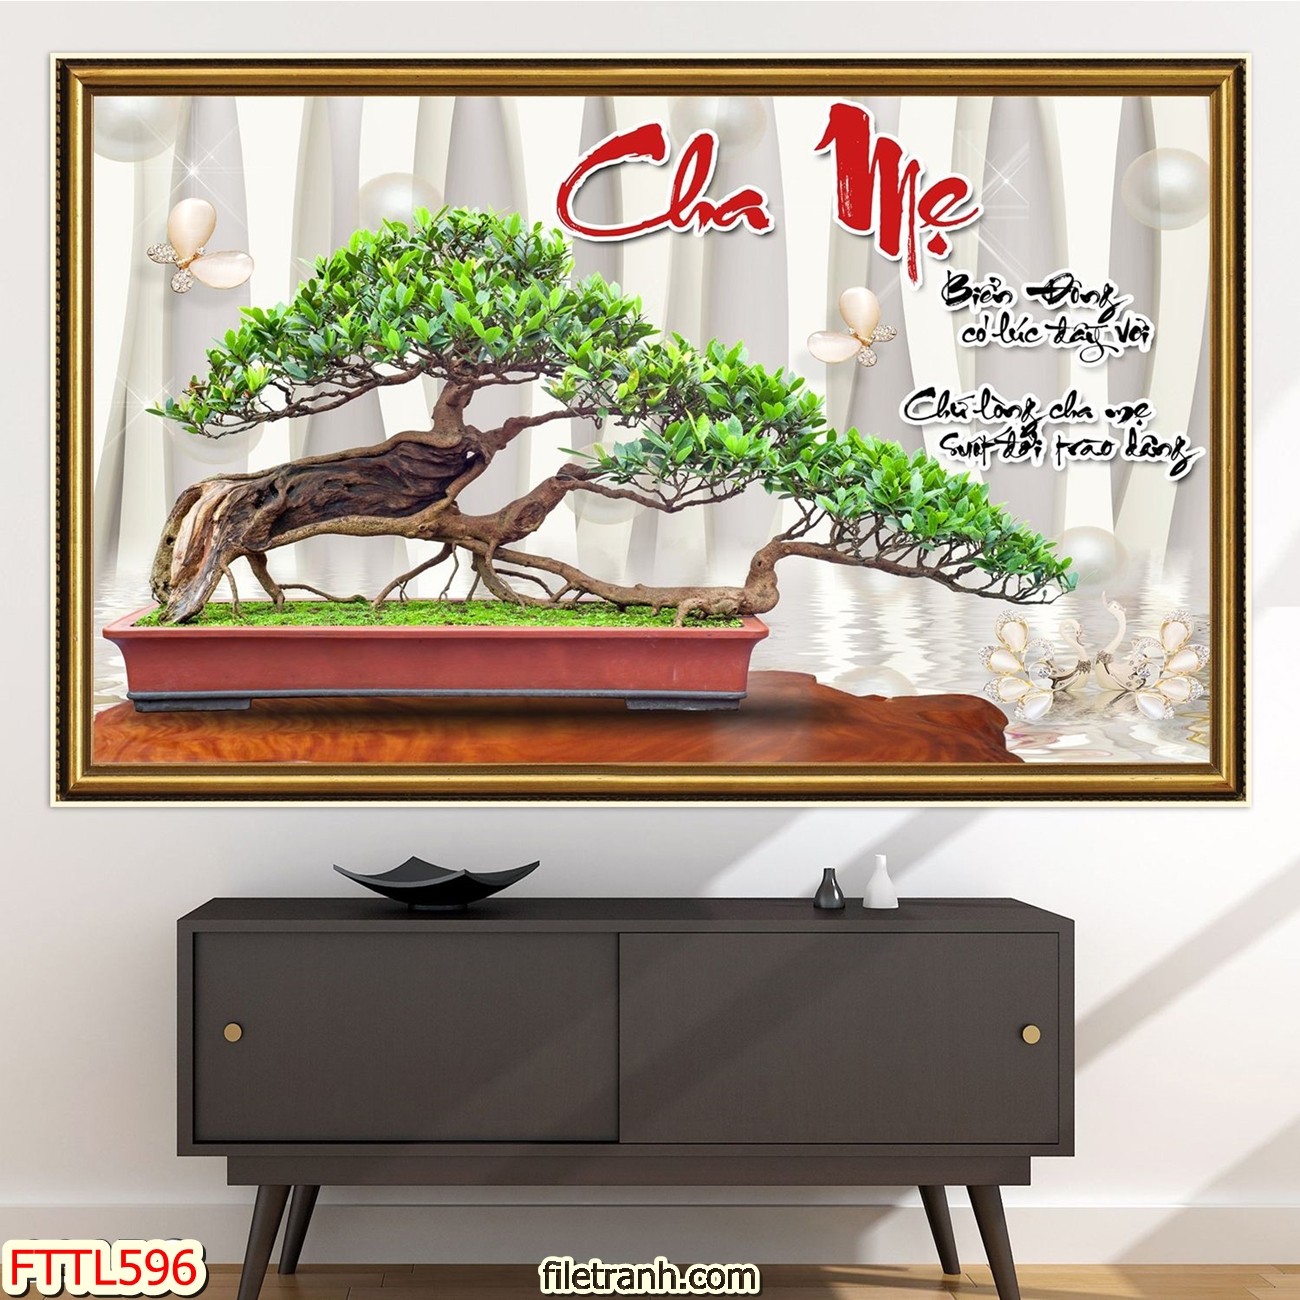 https://filetranh.com/file-tranh-chau-mai-bonsai/file-tranh-chau-mai-bonsai-fttl596.html